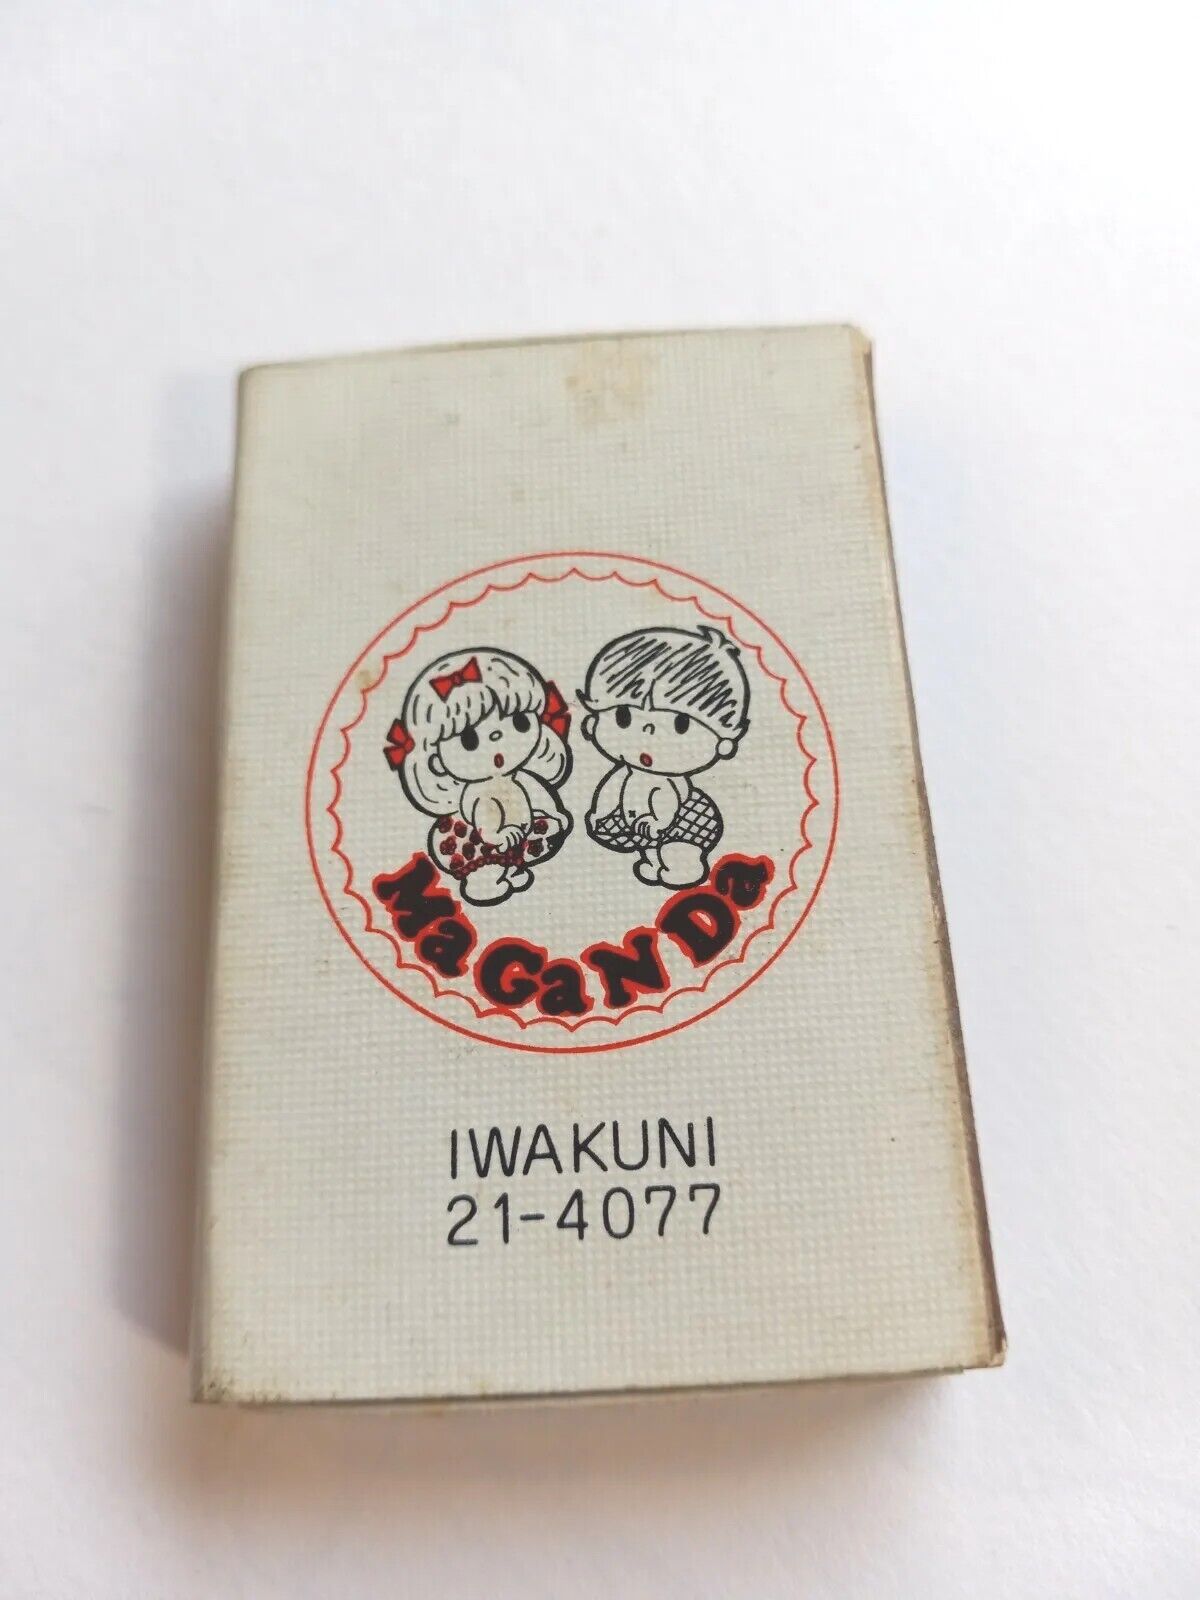 (21-4077) Iwakuni Matchbox